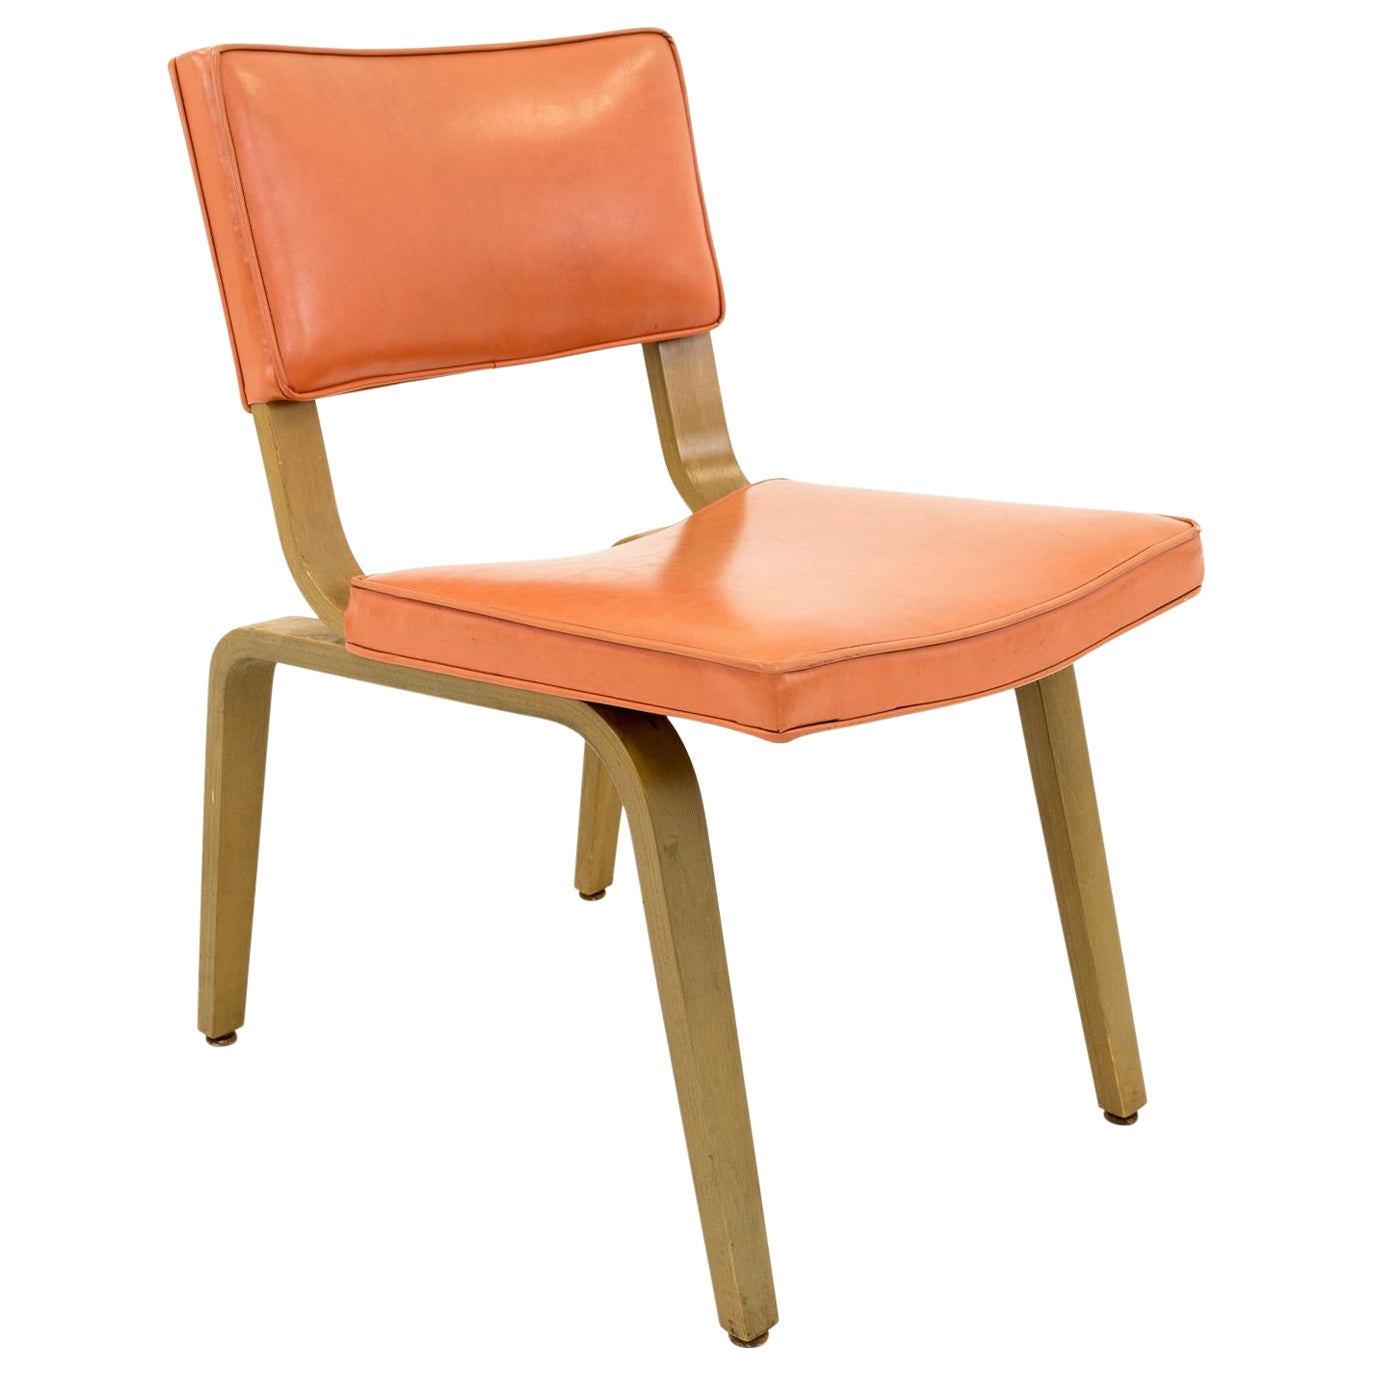 Eero Saarinen Style Thonet Bentwood Mid-Century Dining or Desk Chair